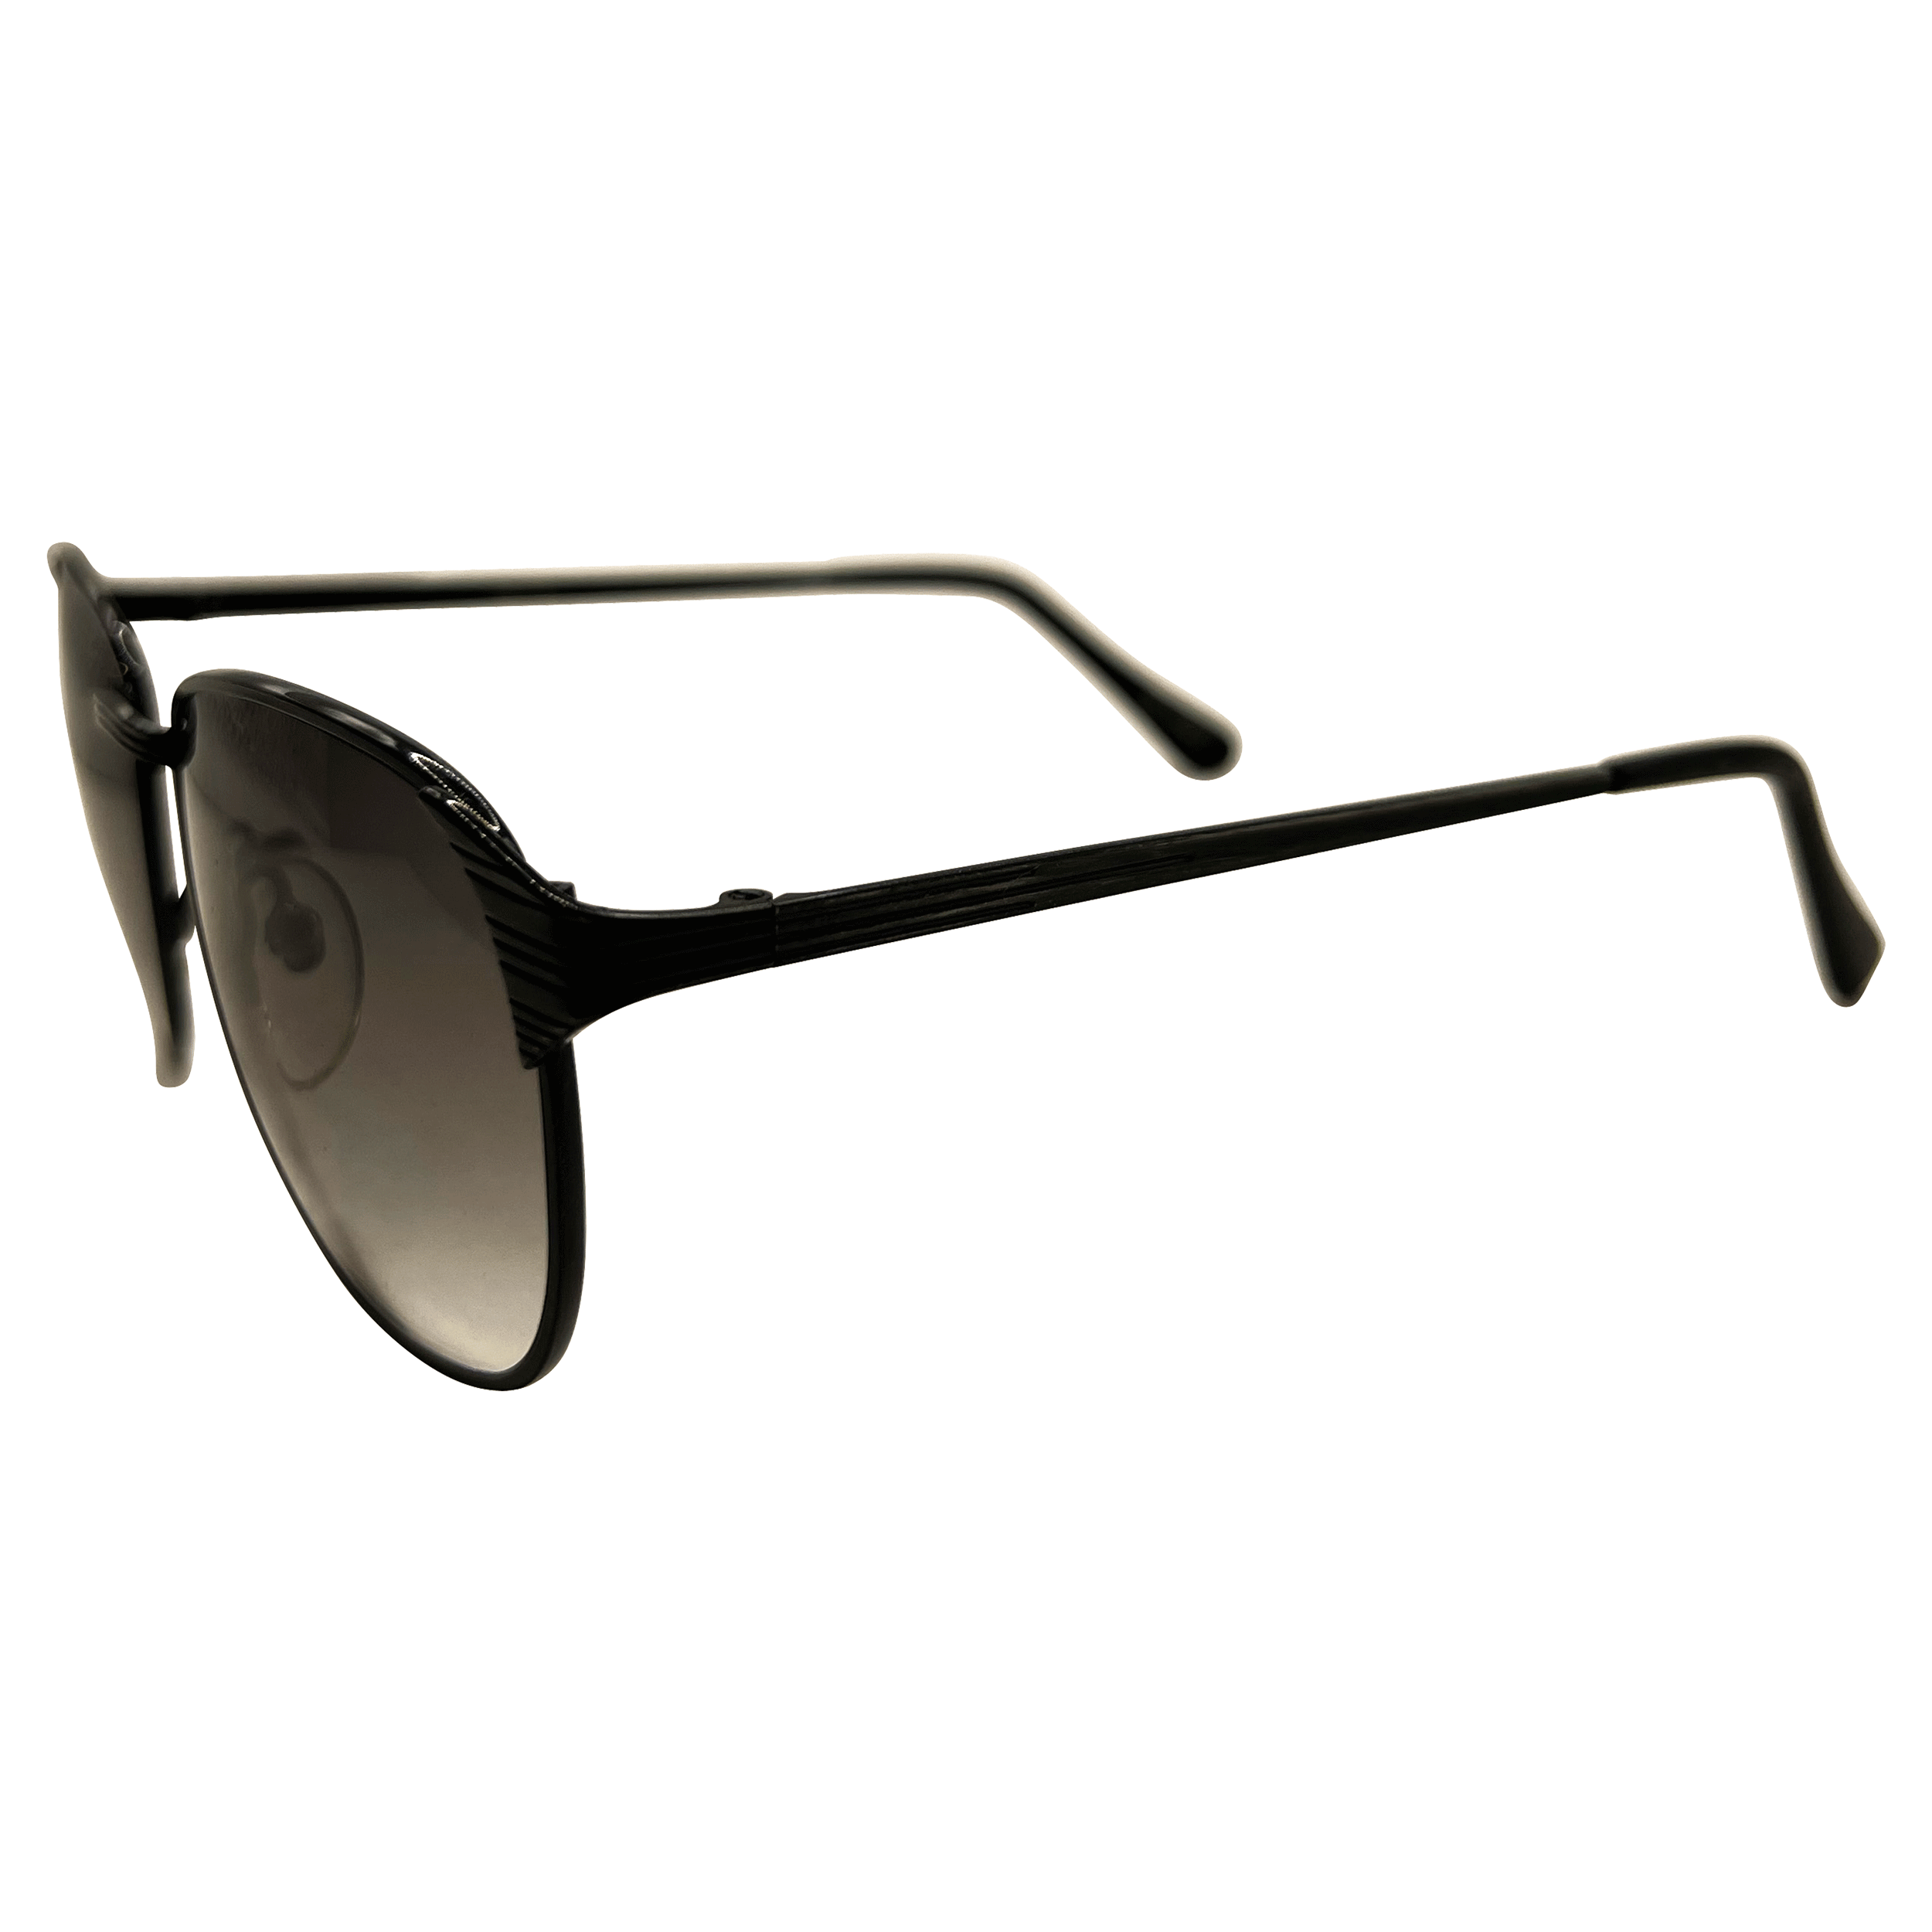 KIKO Relic / Smoke (Purple Tint) Classic Sunglasses